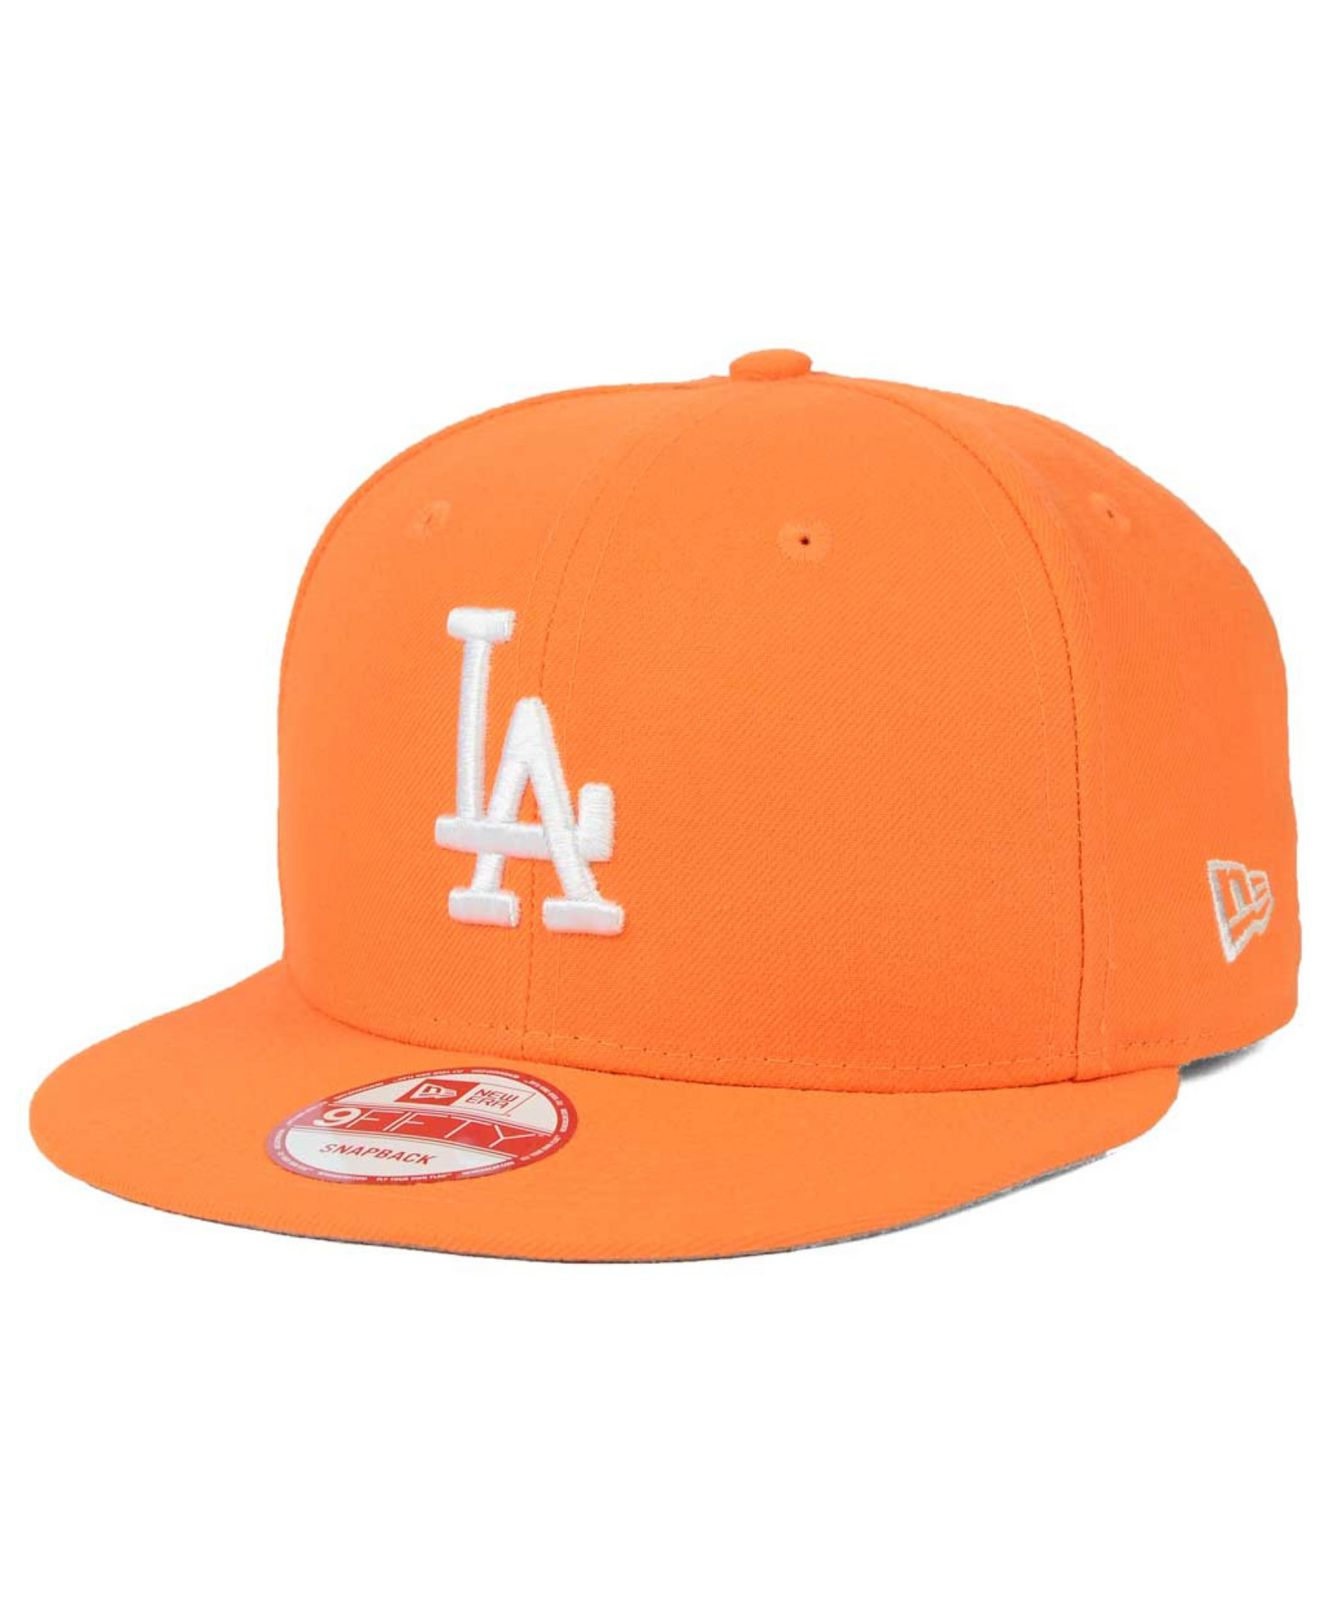 Lyst - Ktz Los Angeles Dodgers C-dub 9fifty Snapback Cap in Orange